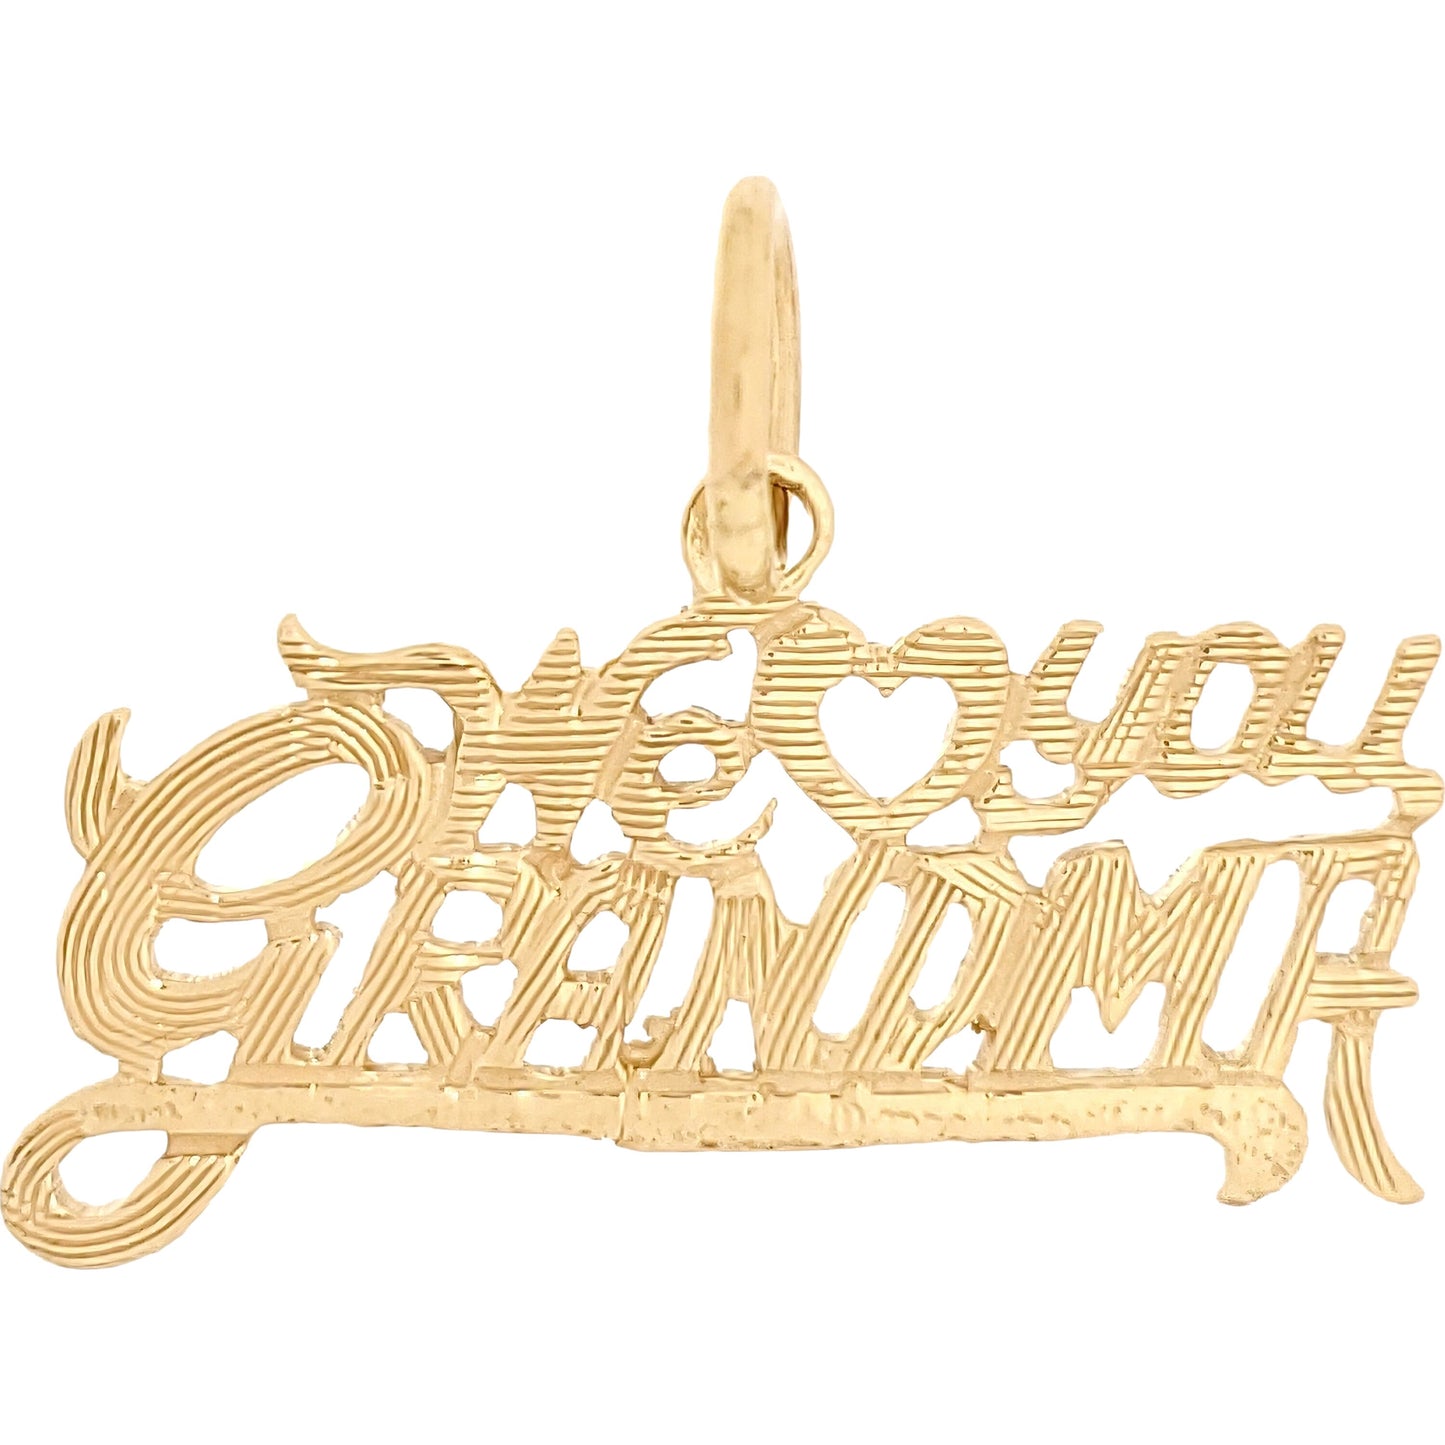 We Love You Grandma Charm Diamond-Cut 14k Gold 14mm